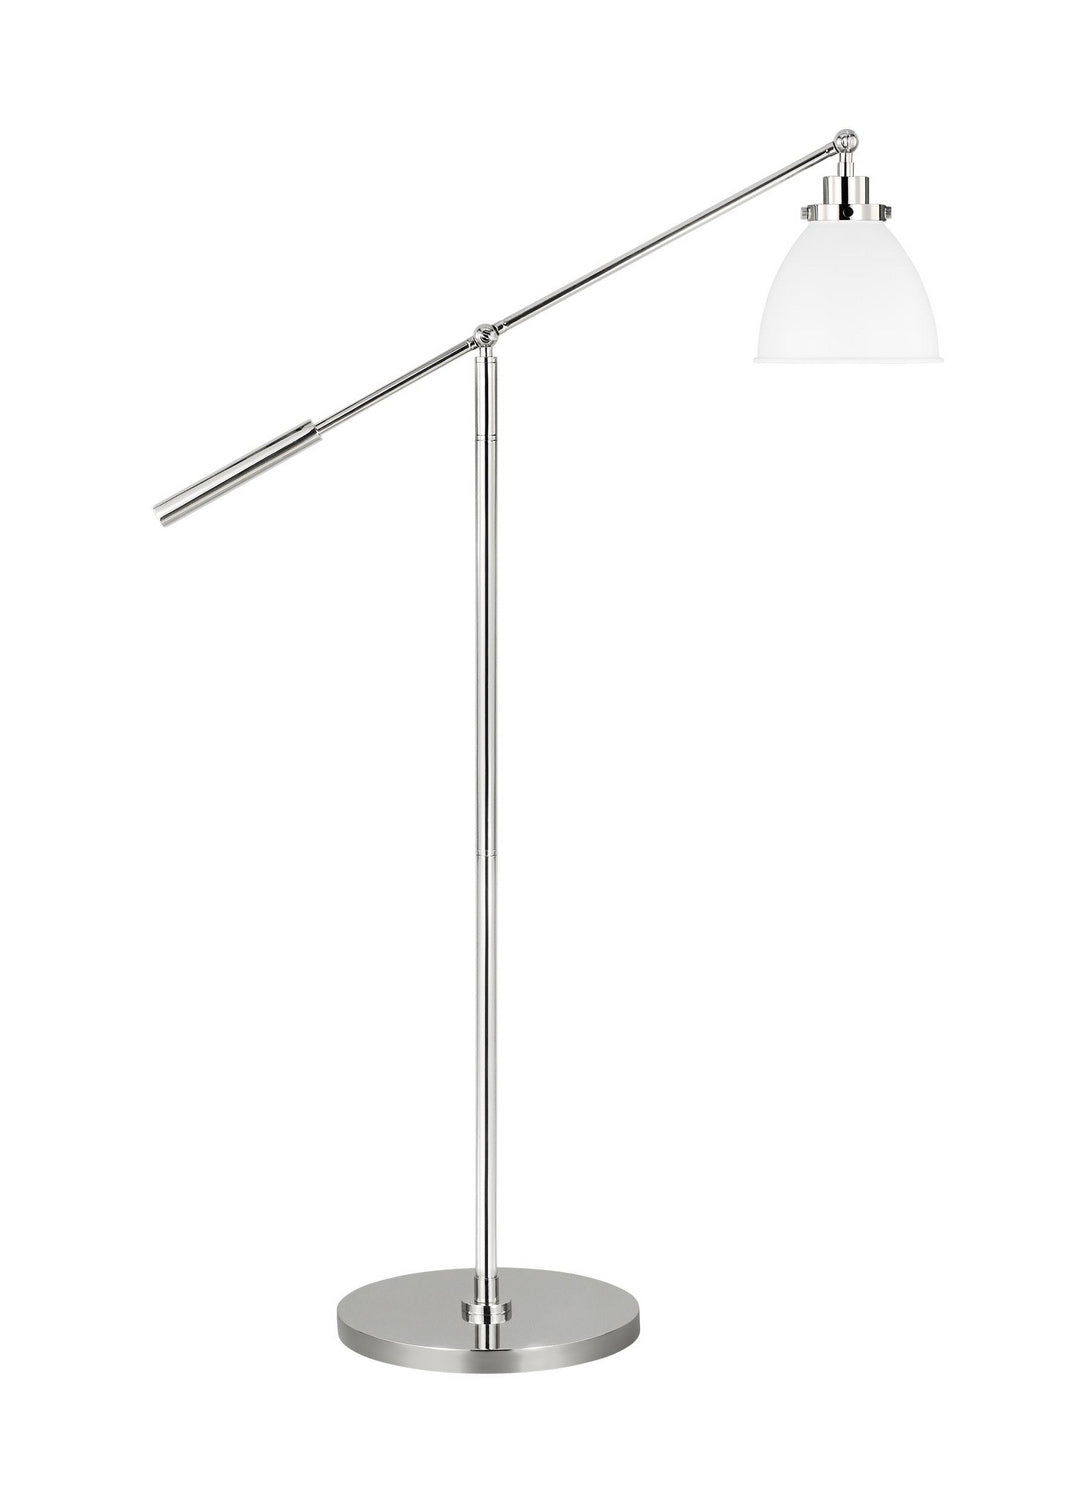 Visual Comfort Studio Canada - One Light Floor Lamp - Wellfleet - Matte White and Polished Nickel- Union Lighting Luminaires Decor